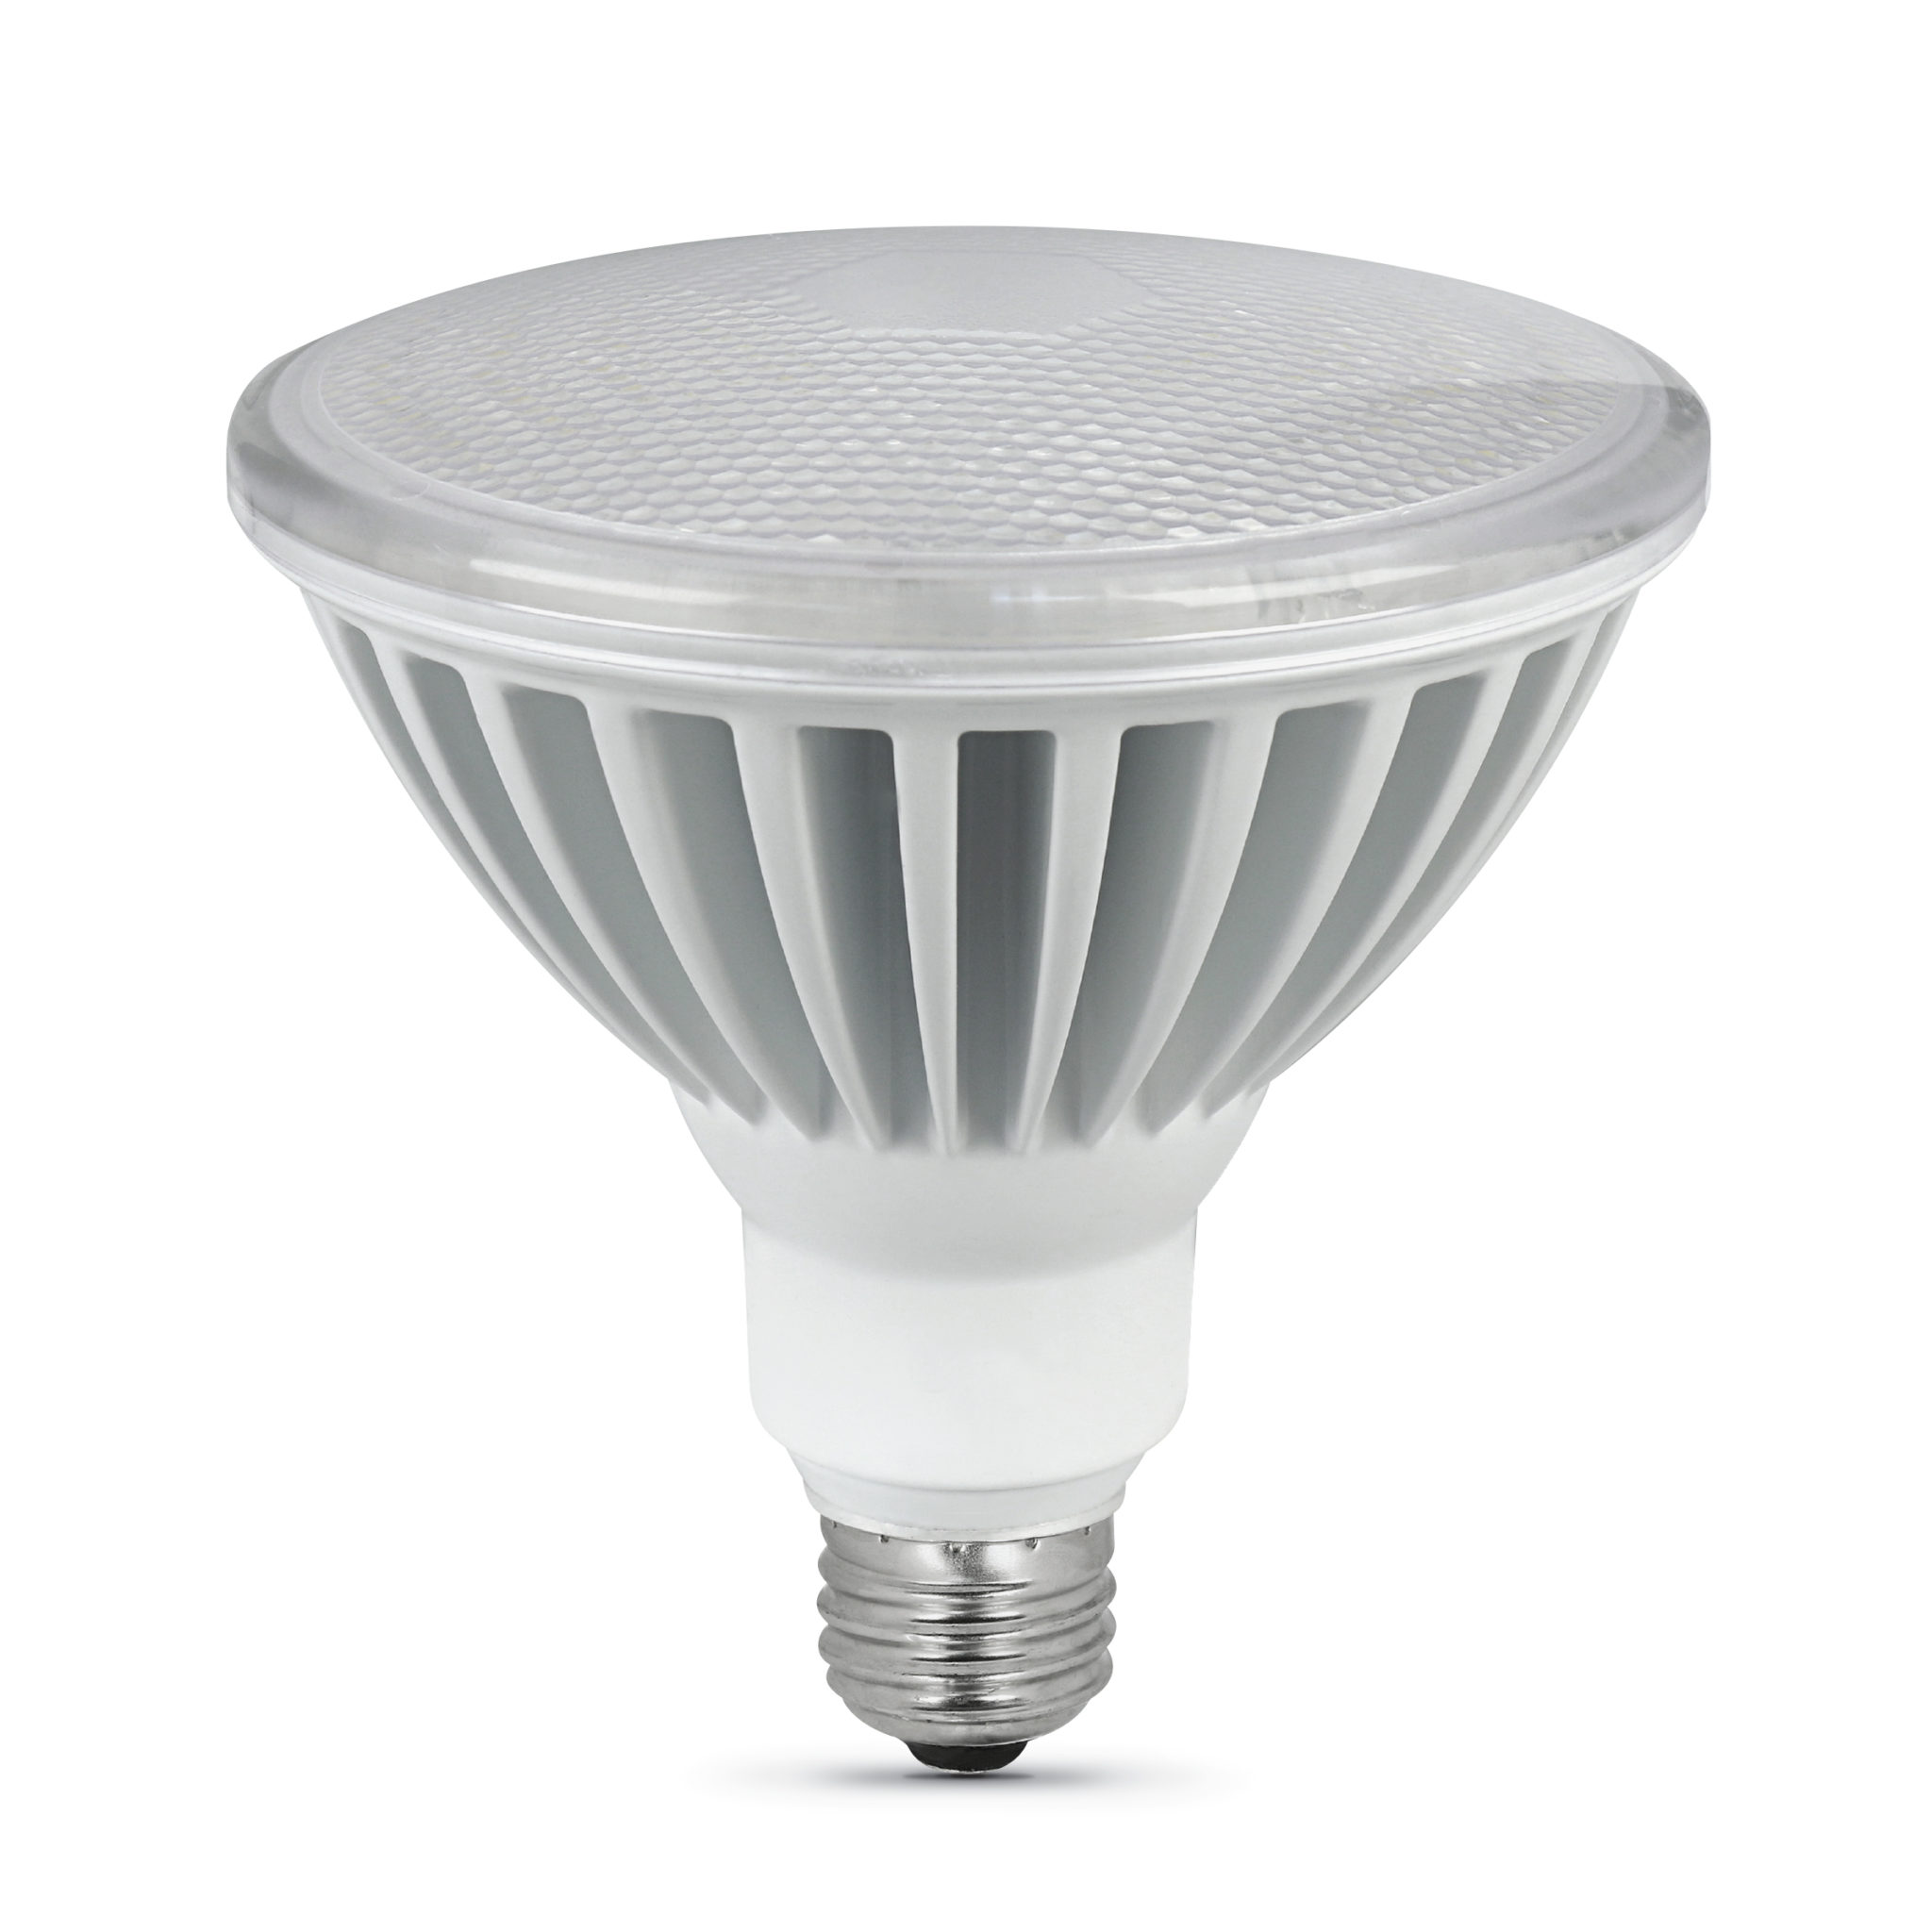 Feit Electric PAR38 18 Watt LED Dimmable Replacement Bulb, 950 Lumens